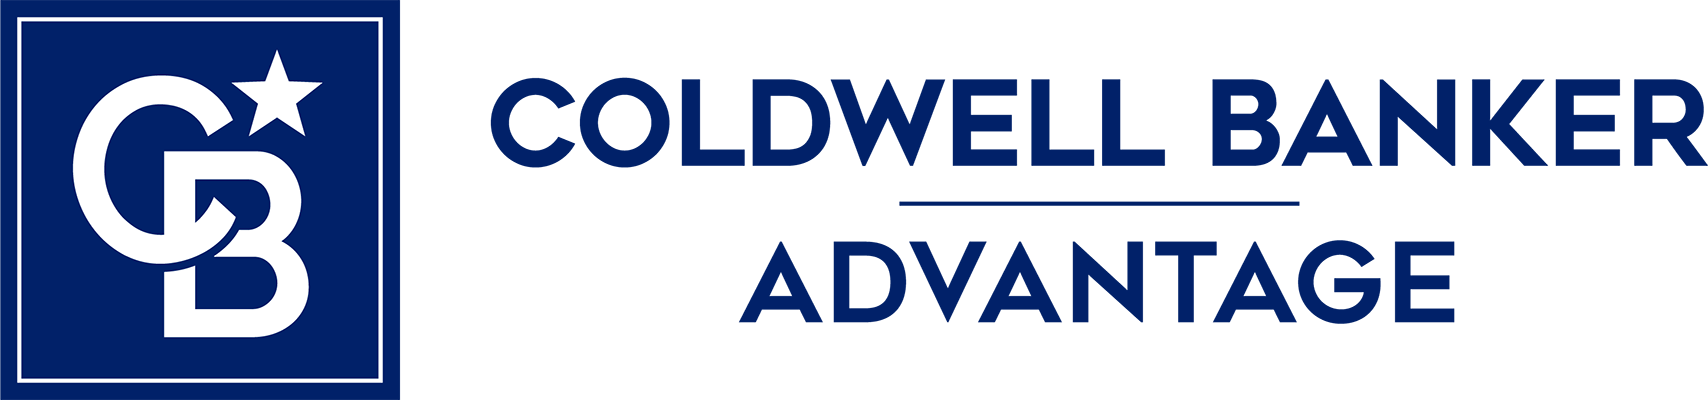 Sharon Webb - Coldwell Banker Advantage Logo